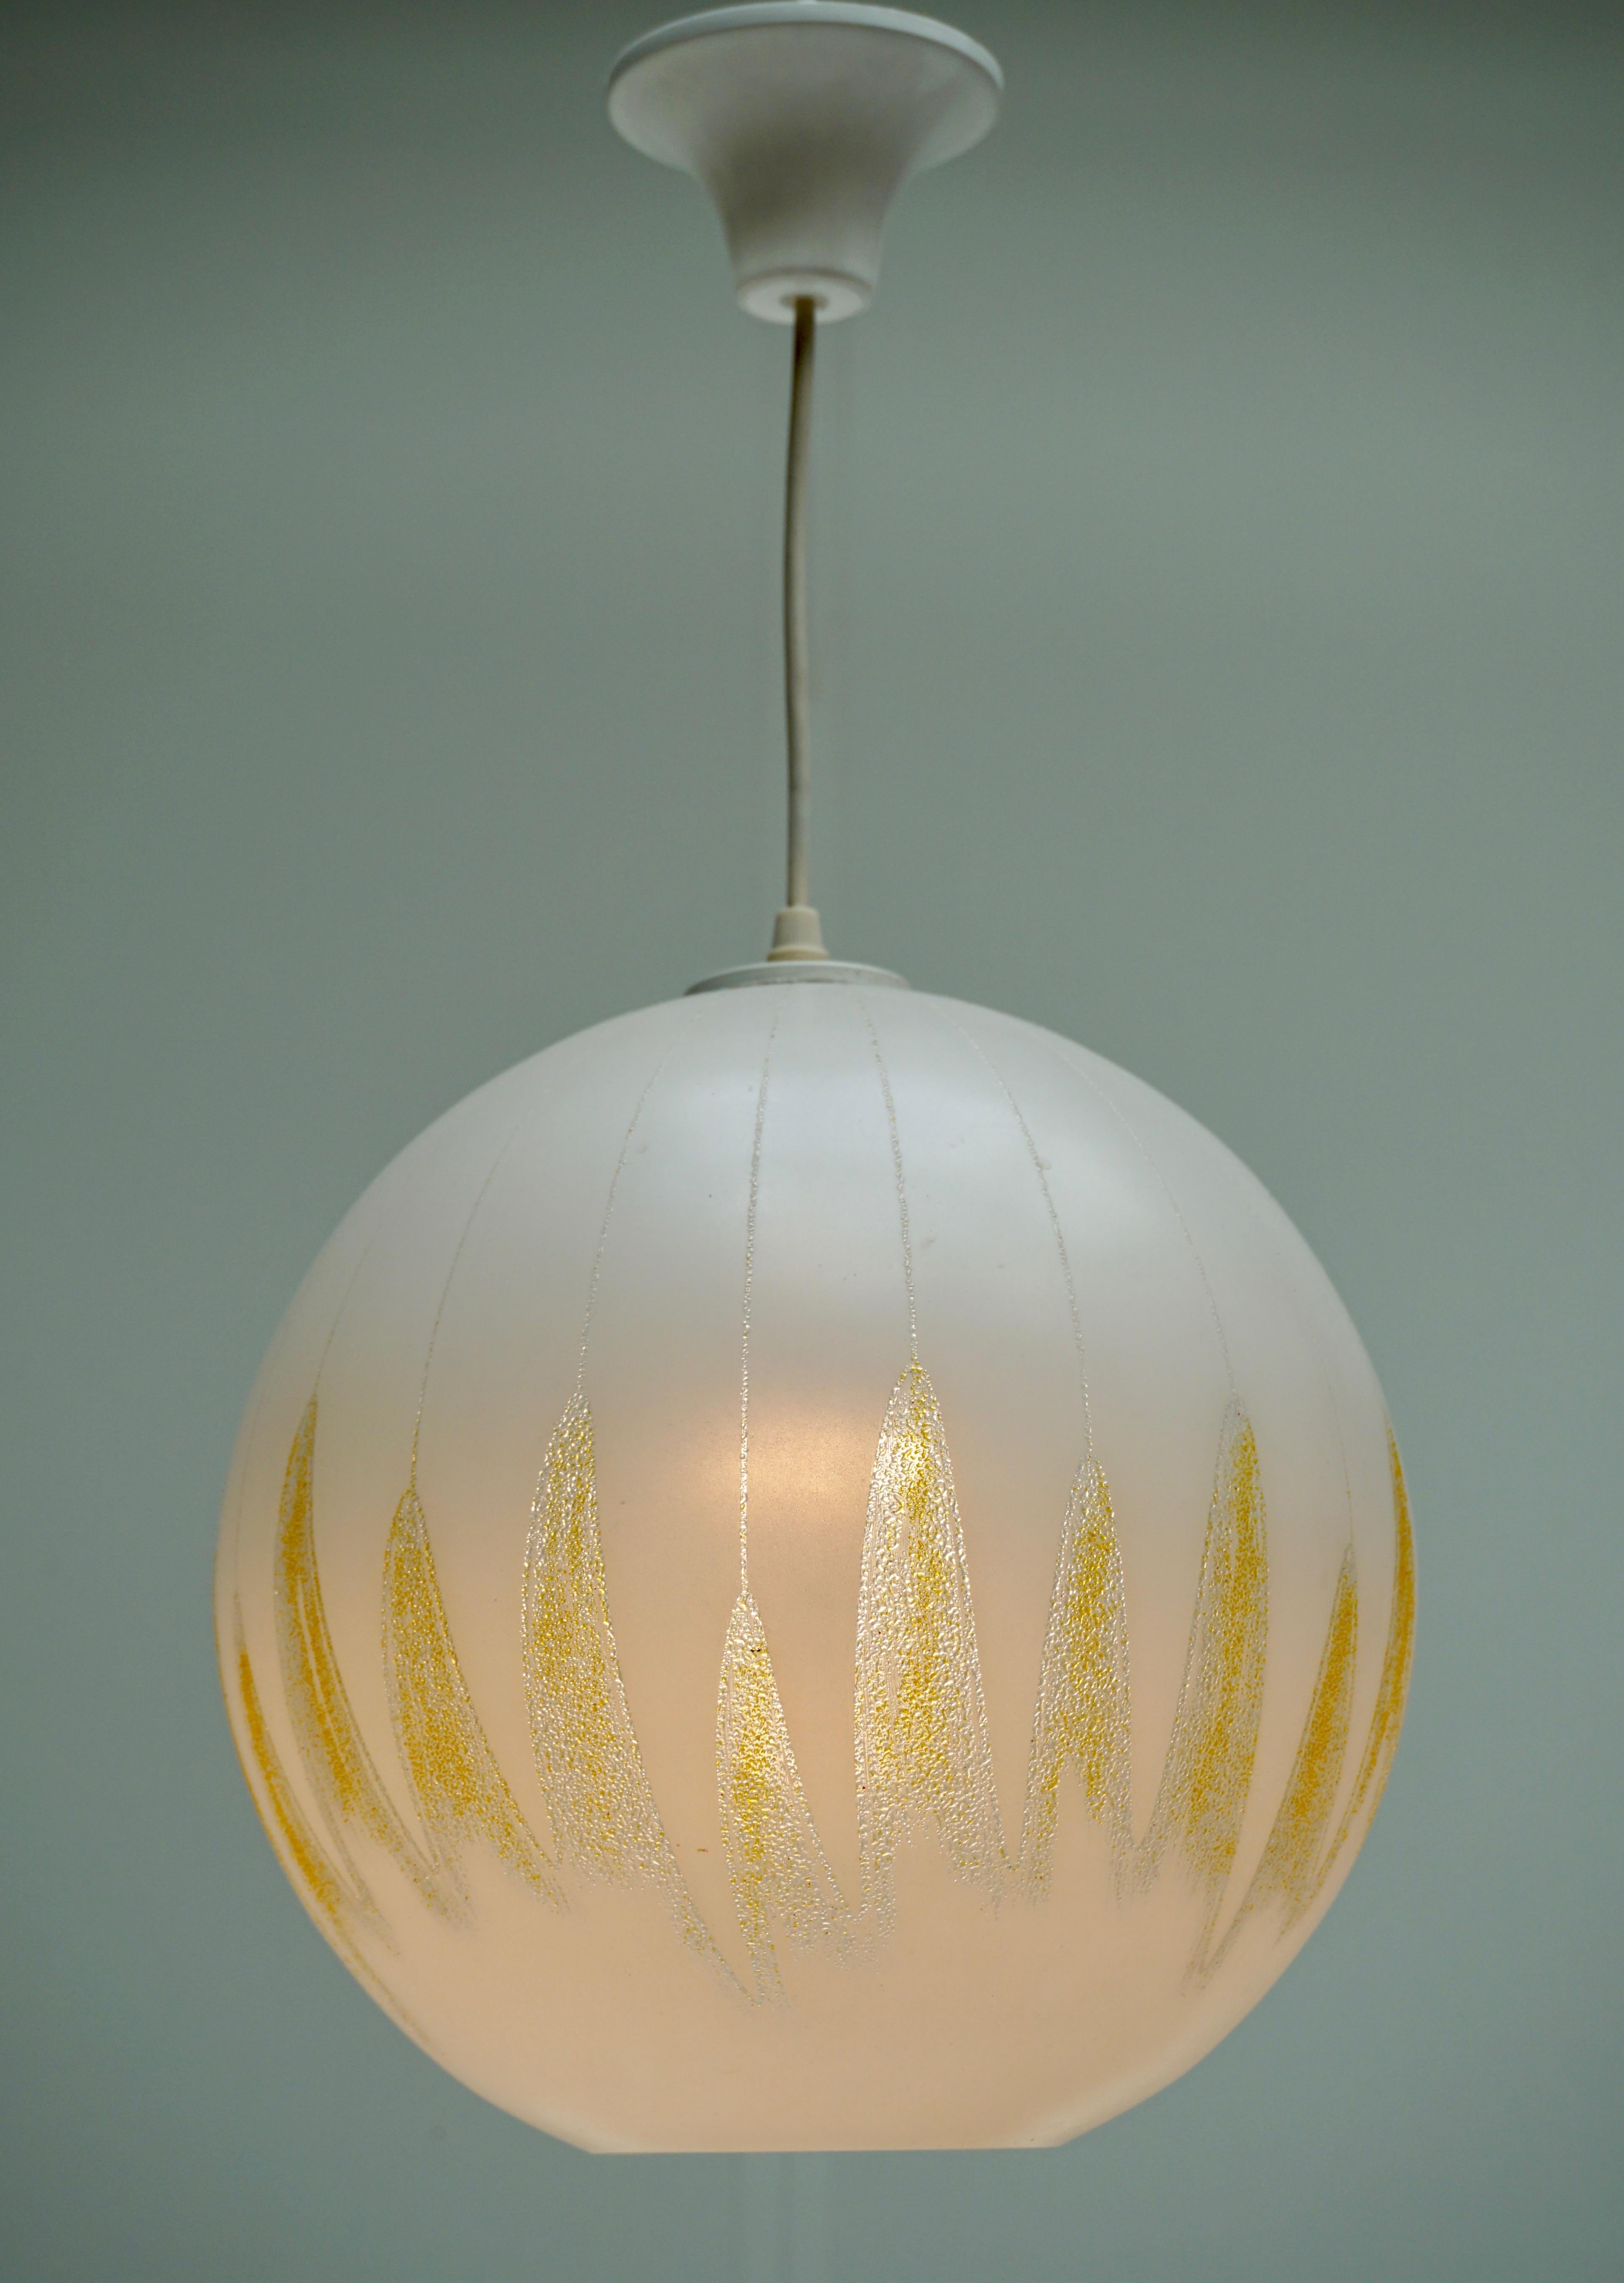 Italian Murano glass ceiling lamp with yellow decoration.
Measures: Diameter 29 cm.
Height 100 cm.